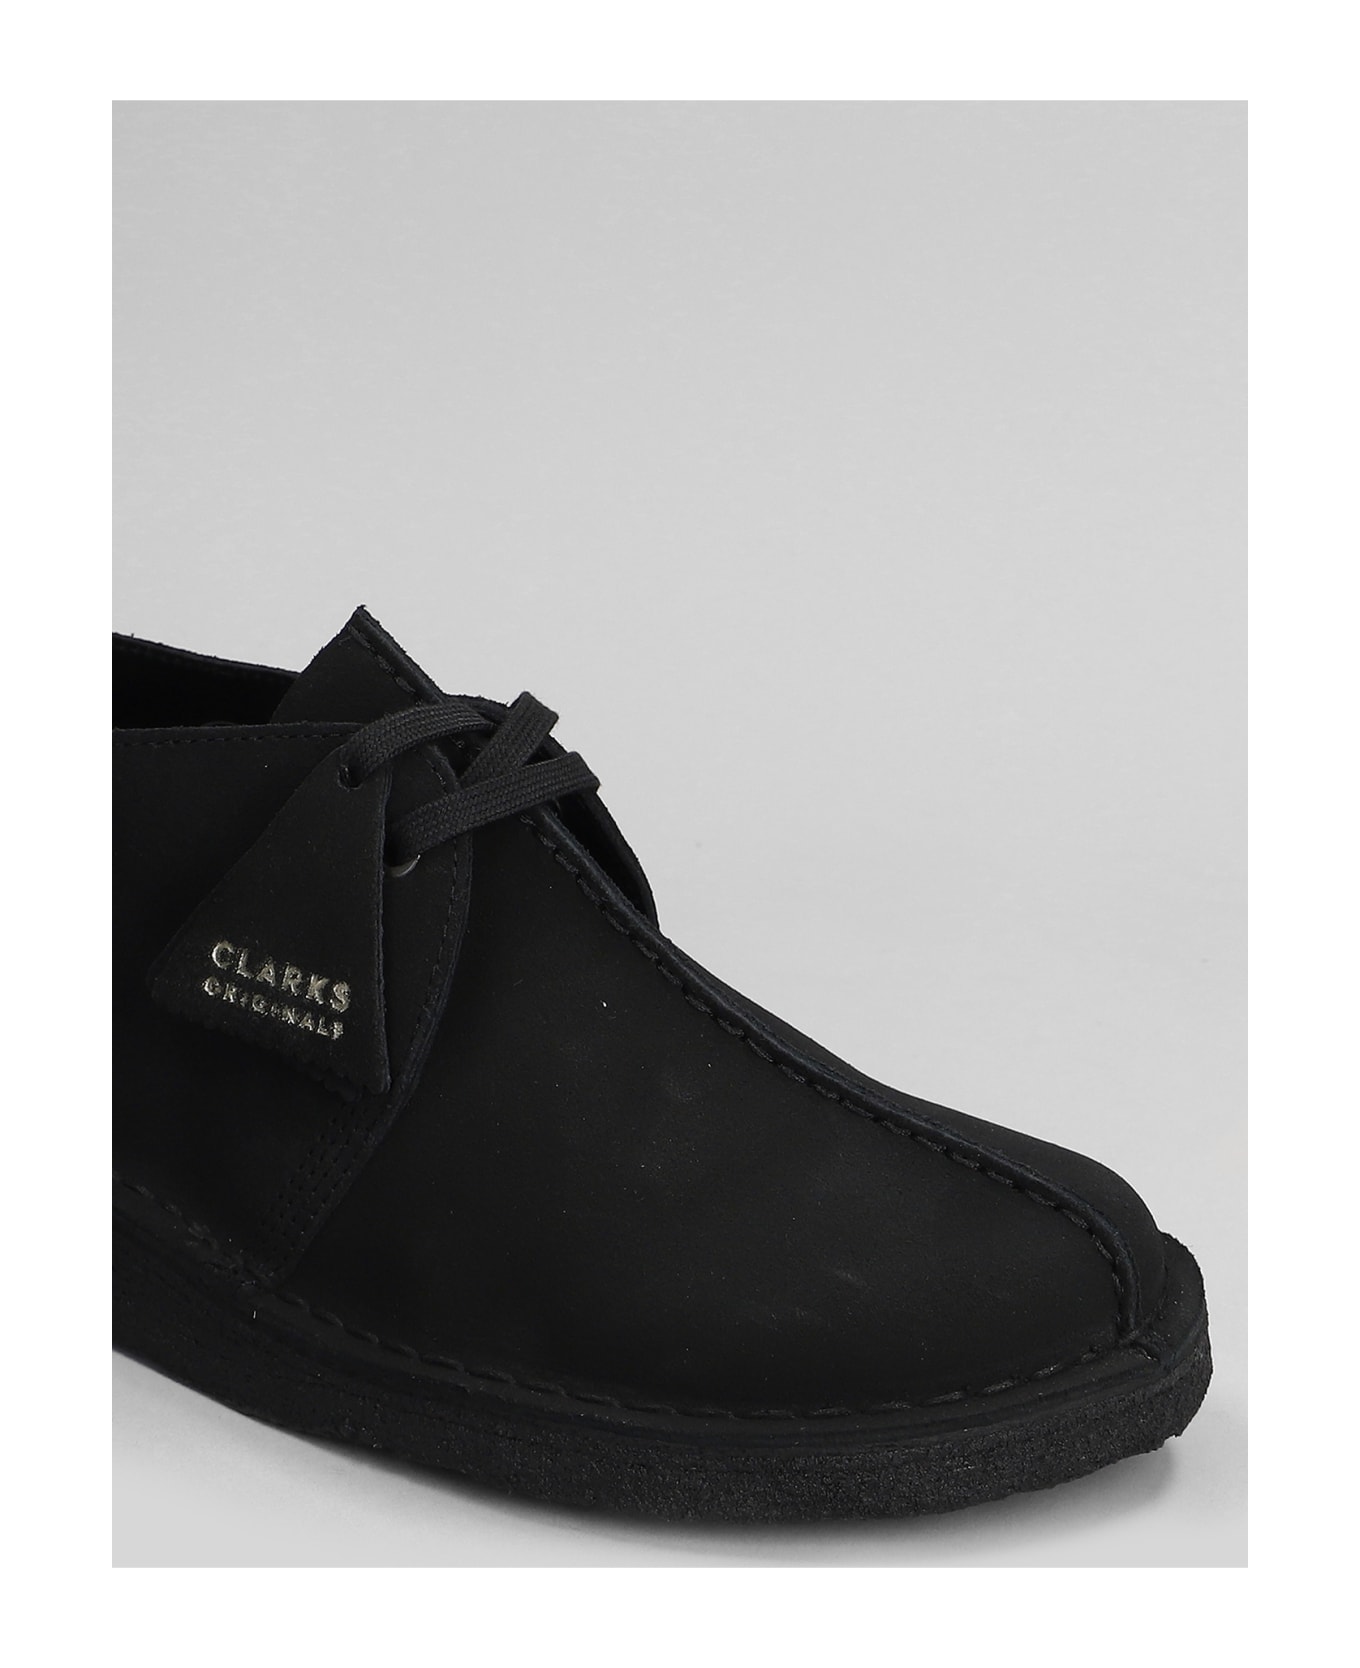 Clarks Desert Trek Lace Up Shoes In Black Suede - black